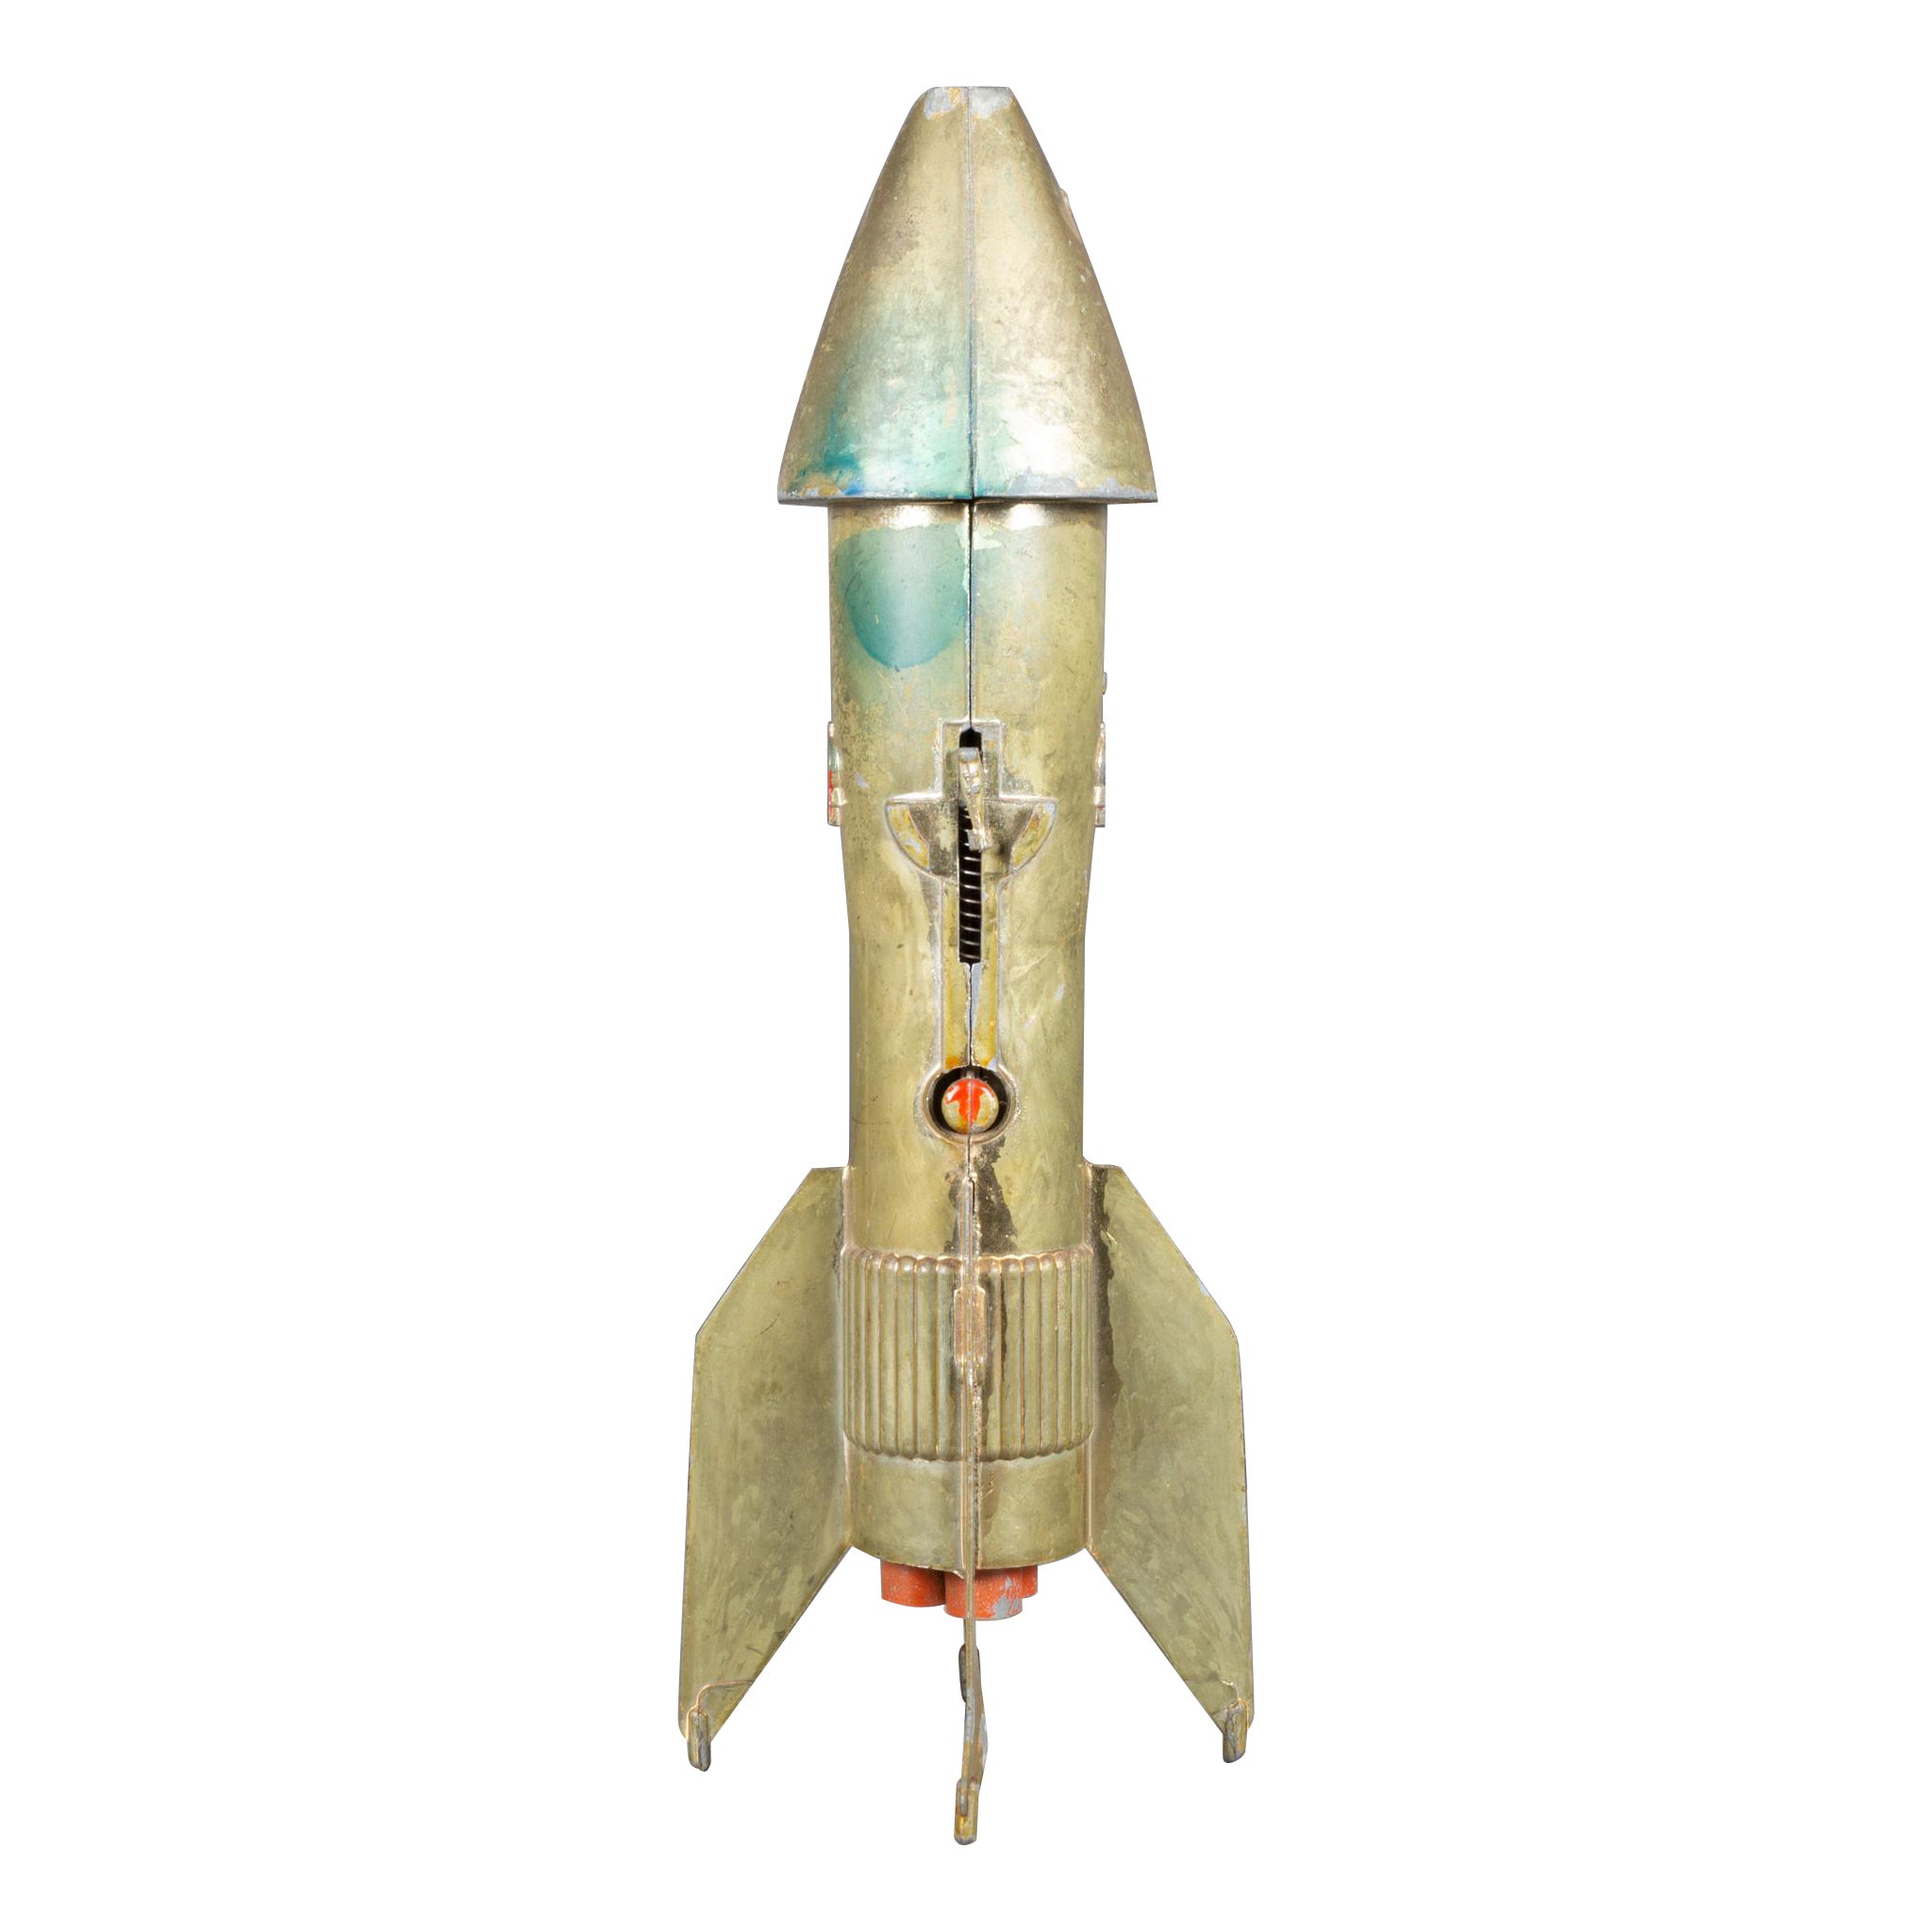 Vintage Astro Rocket Ship Savings Bank c.1957  (LIVRAISON GRATUITE)